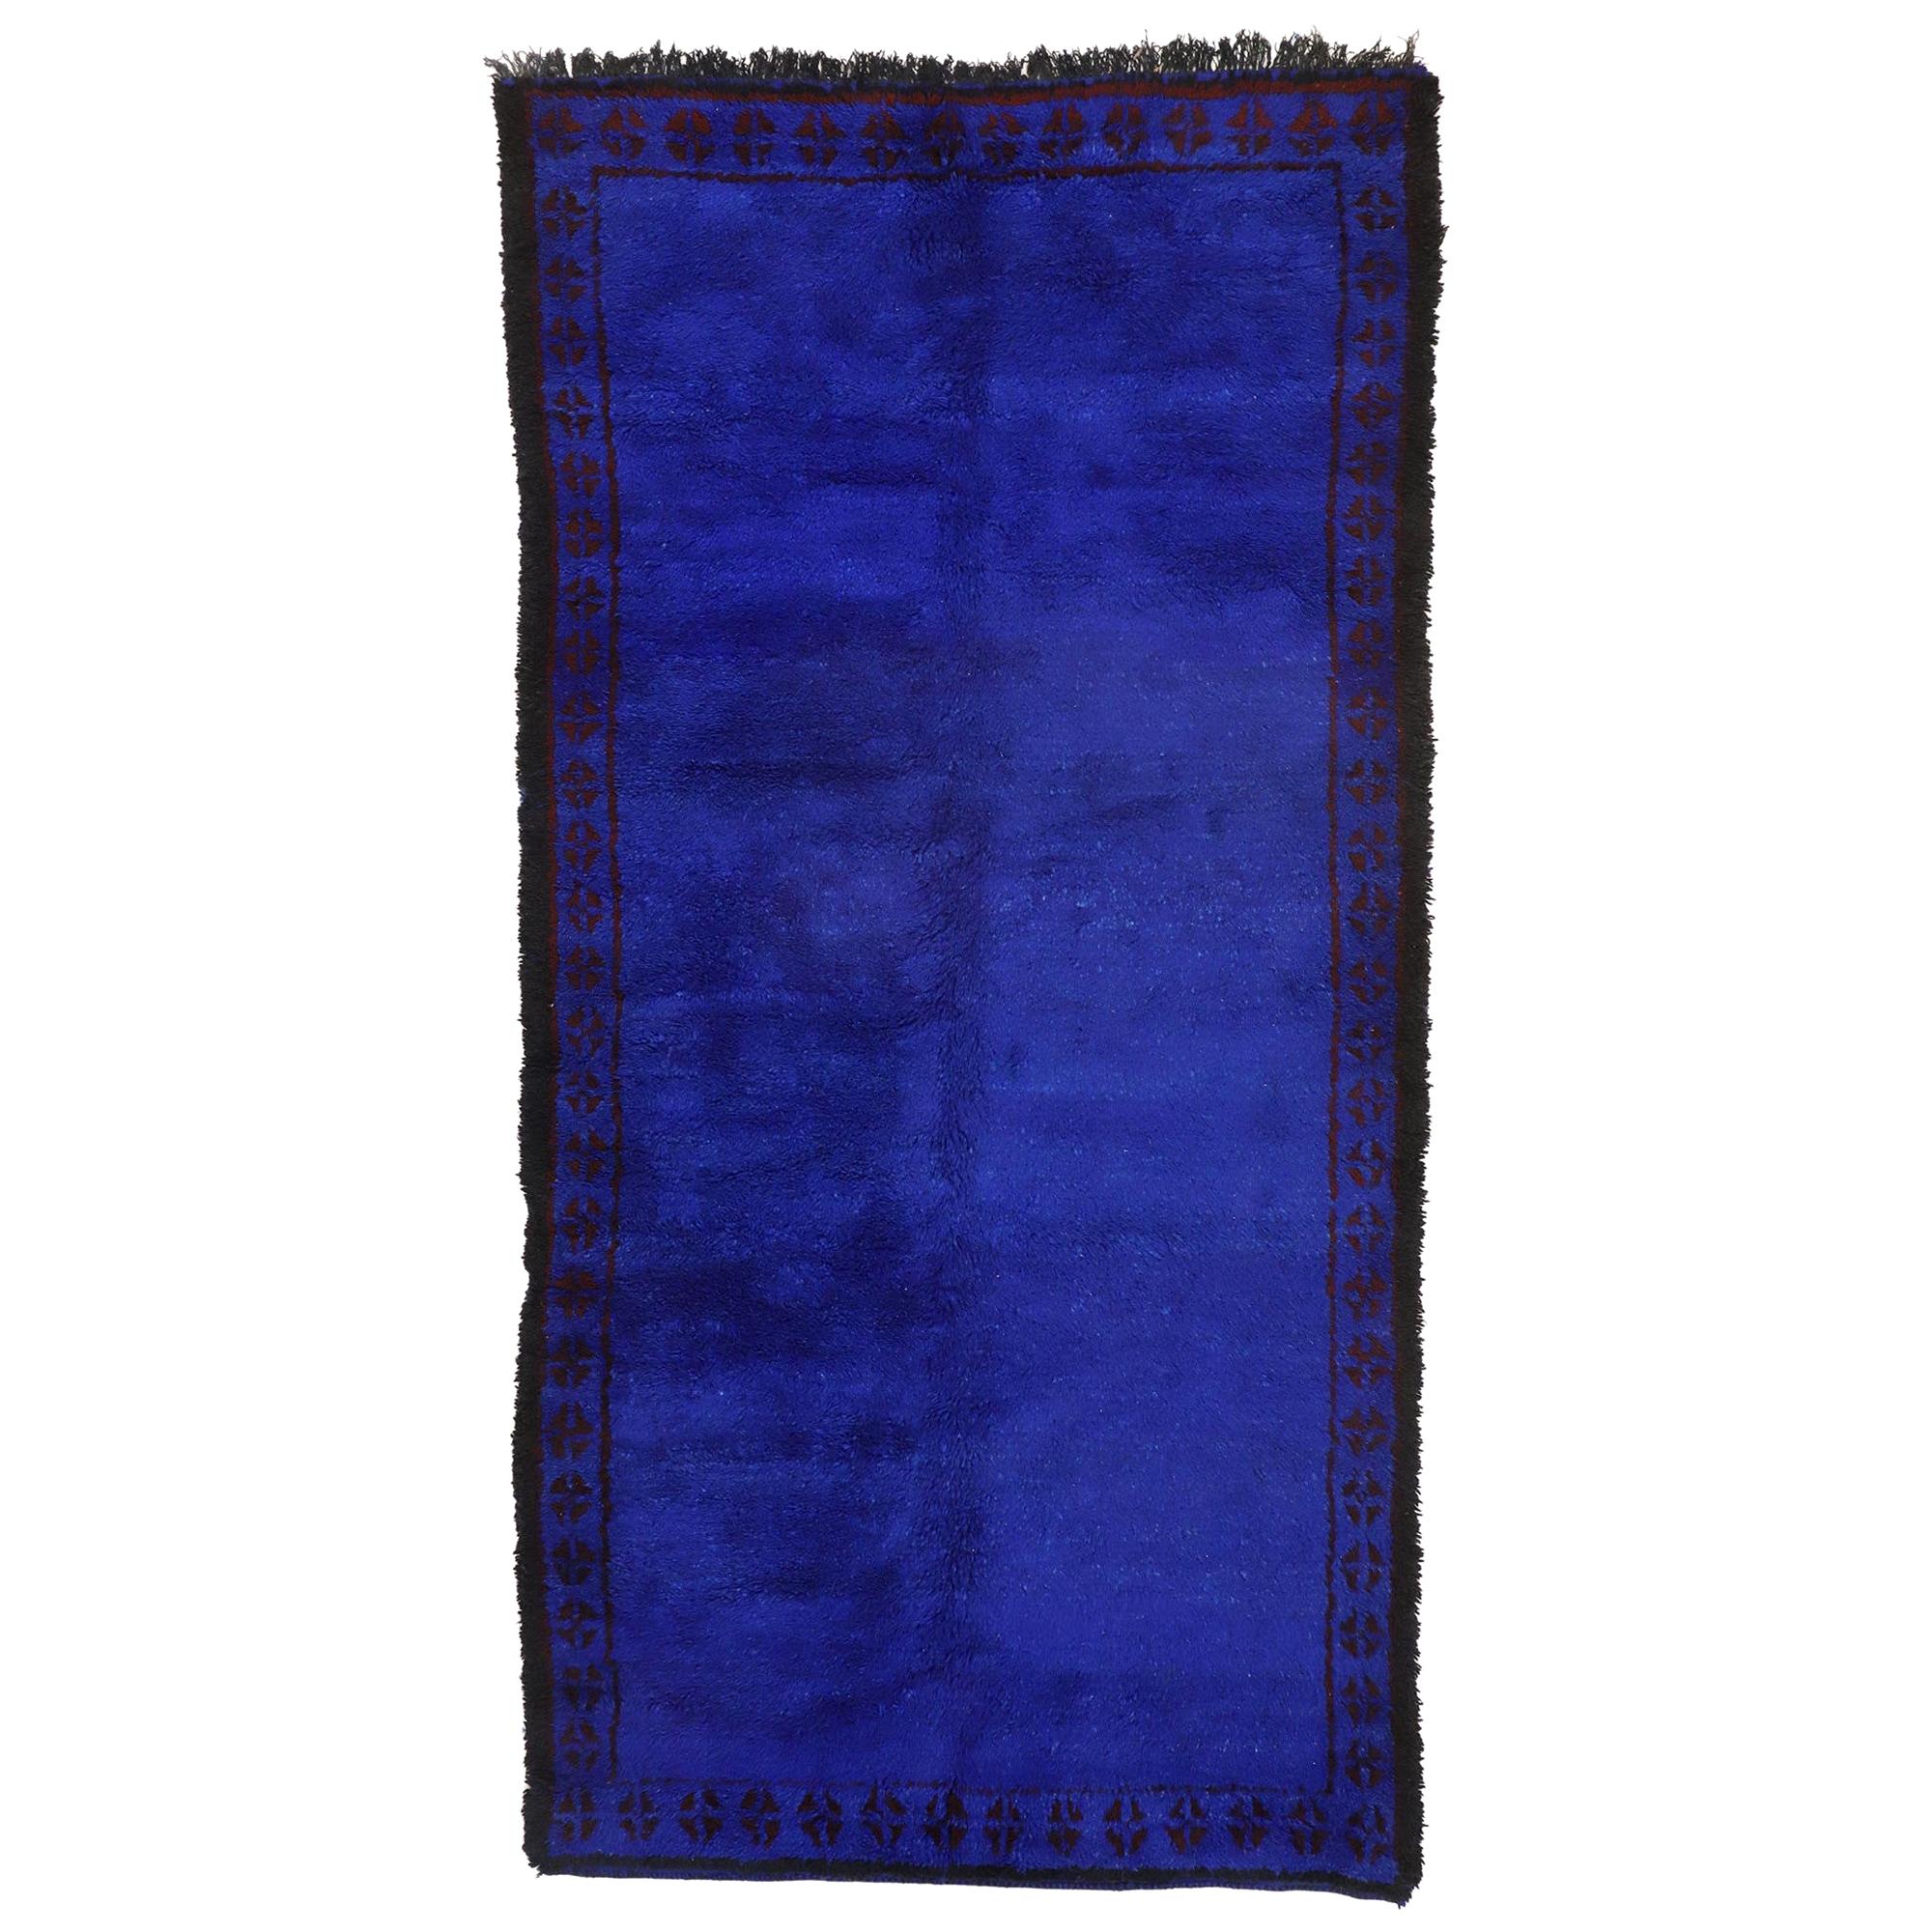 Vintage Indigo Beni M'Guild Moroccan Rug, Berber Blue Moroccan Carpet